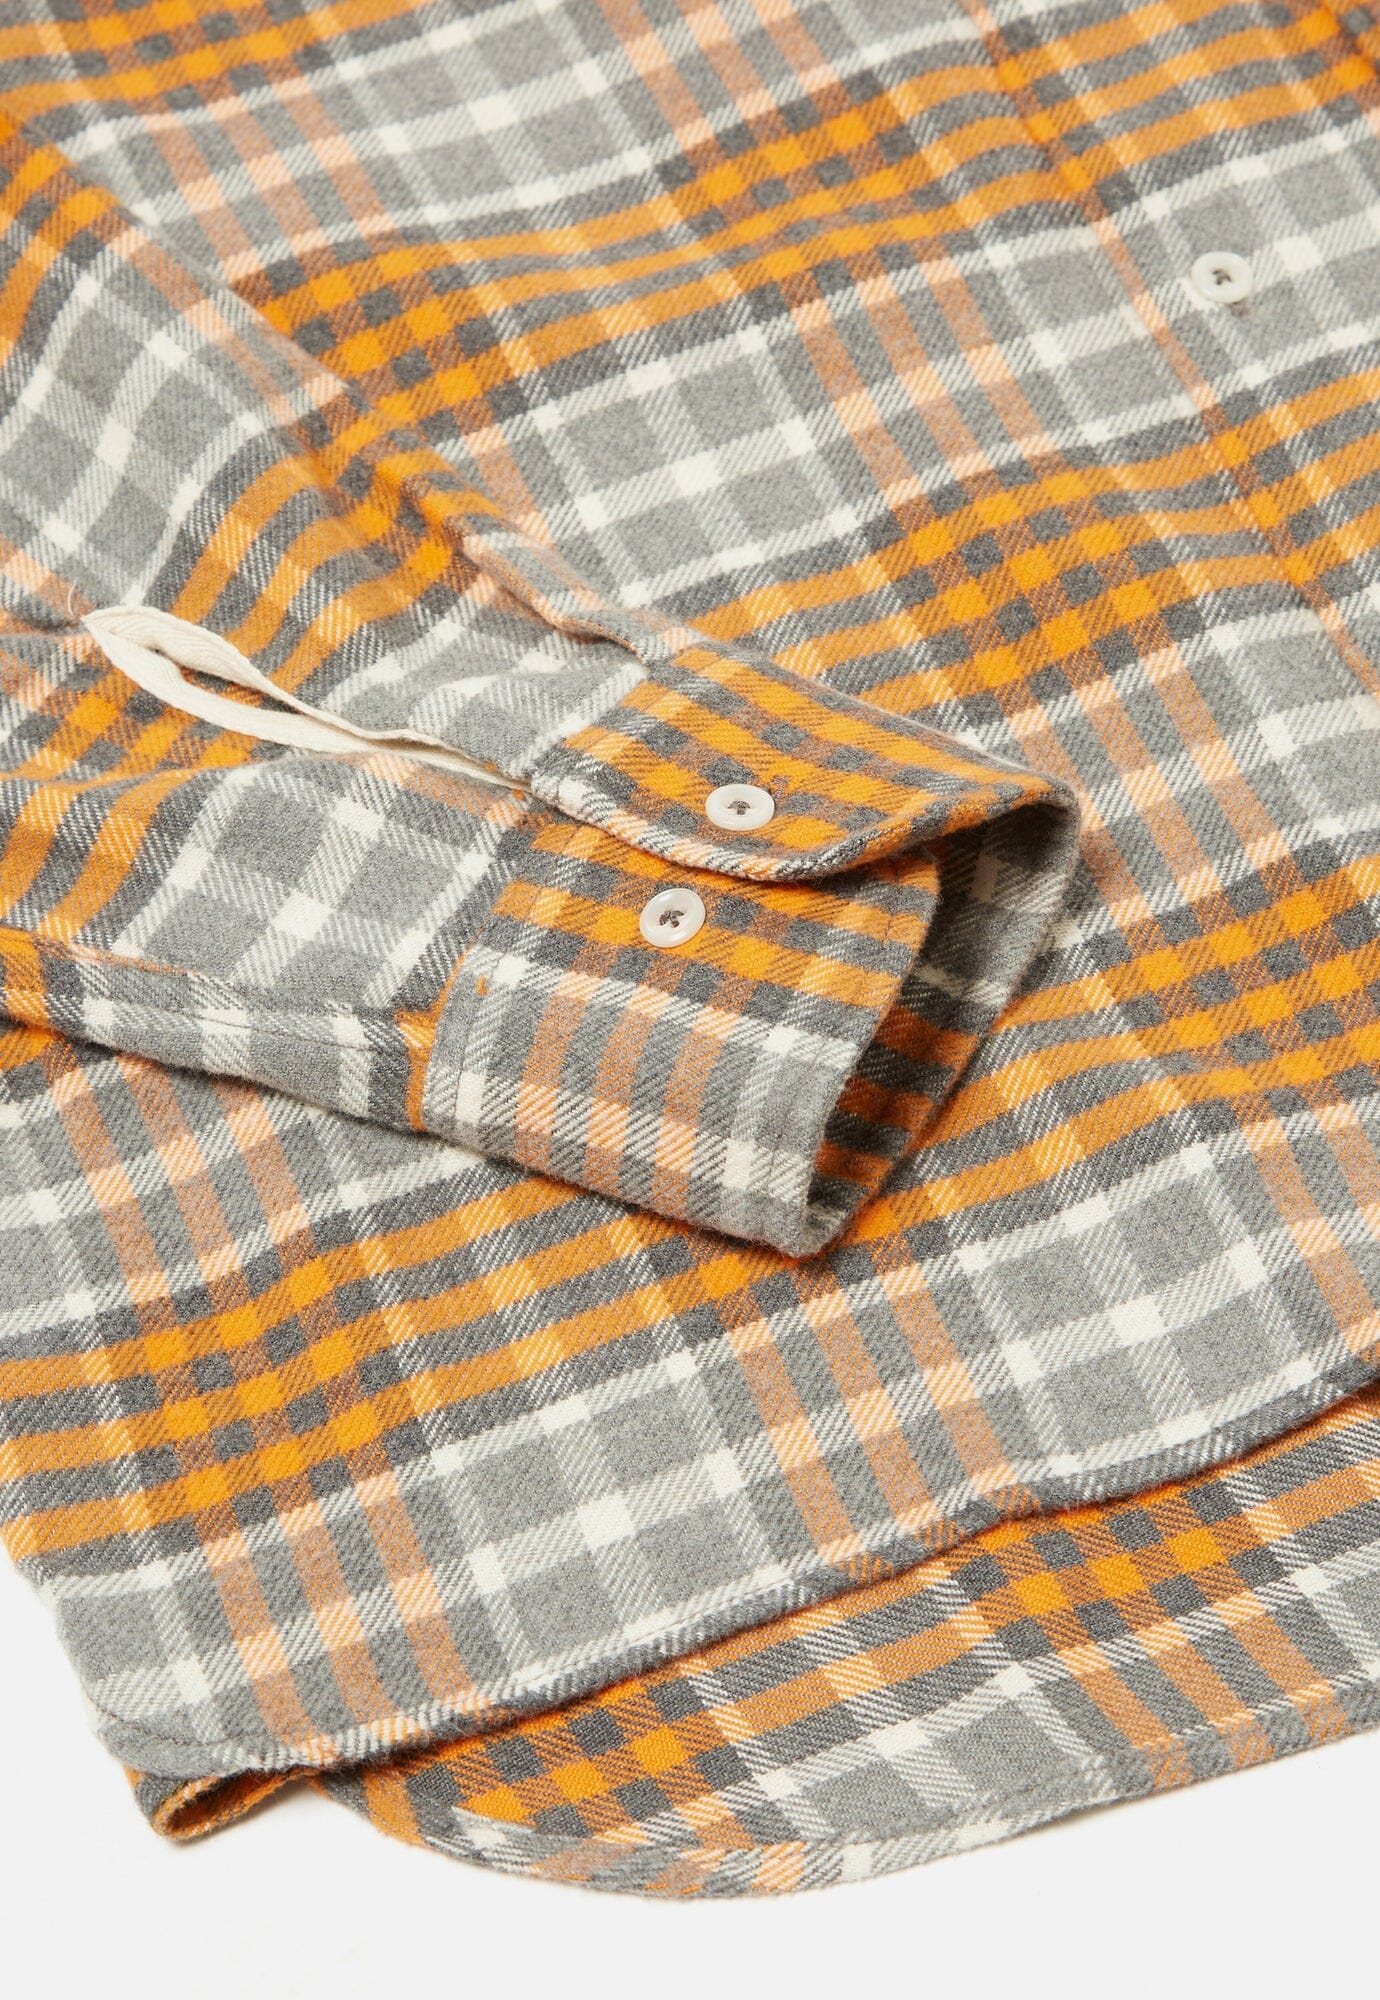 Universal Works - Square Pocket Shirt In Grey Marl/Orange Brushed Cotton Plaid - City Workshop Men's Supply Co.